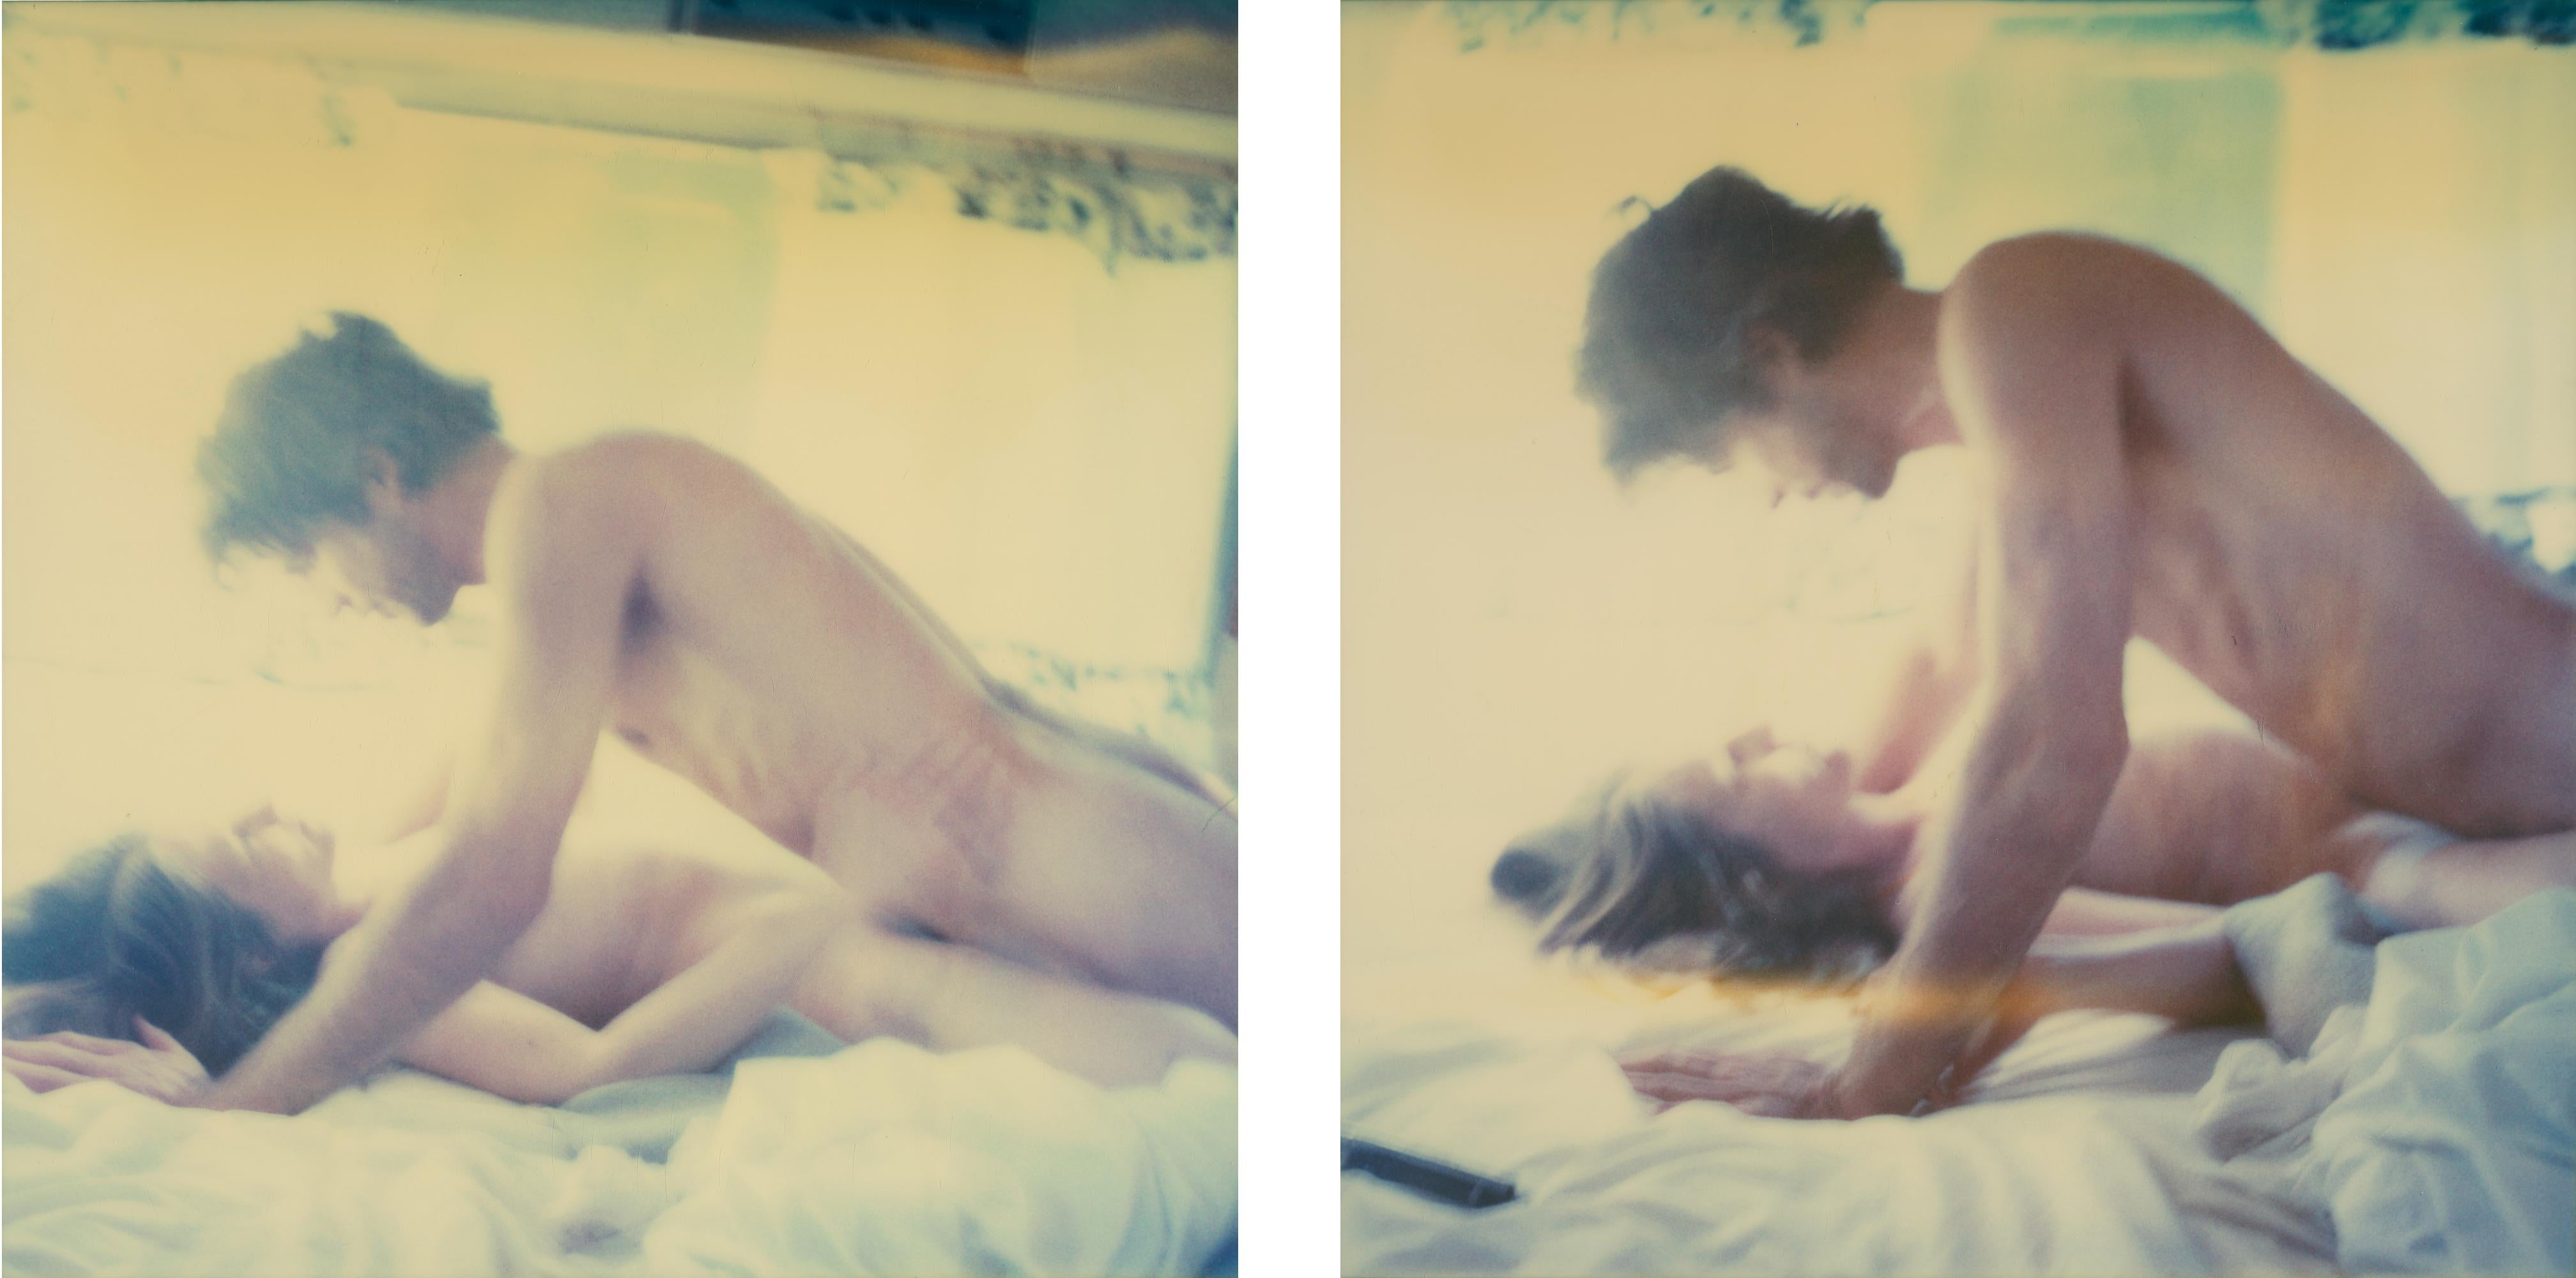 Stefanie Schneider Nude Photograph - Moments in Time (Sidewinder) diptych, Polaroid, Nude, 21st Century, Contemporary